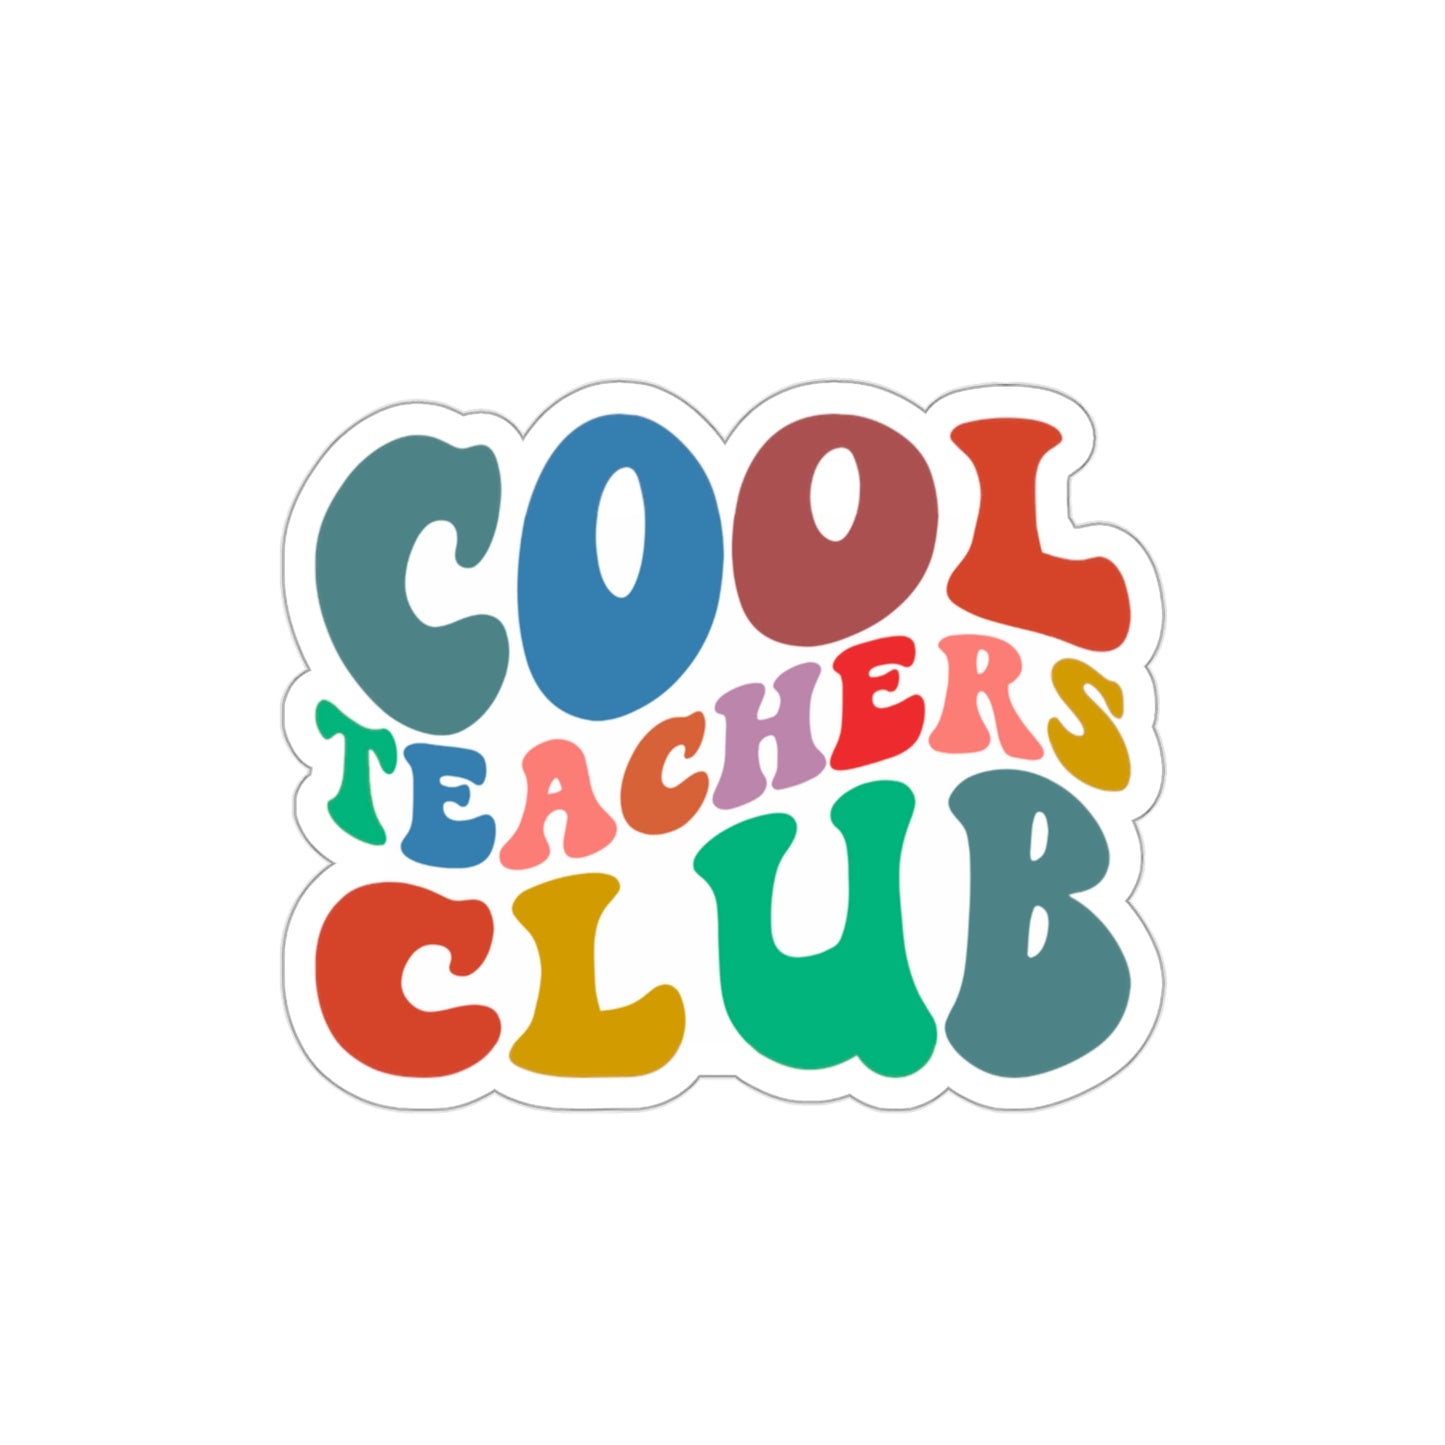 Cool Teachers Club | Die-Cut Vinyl Stickers